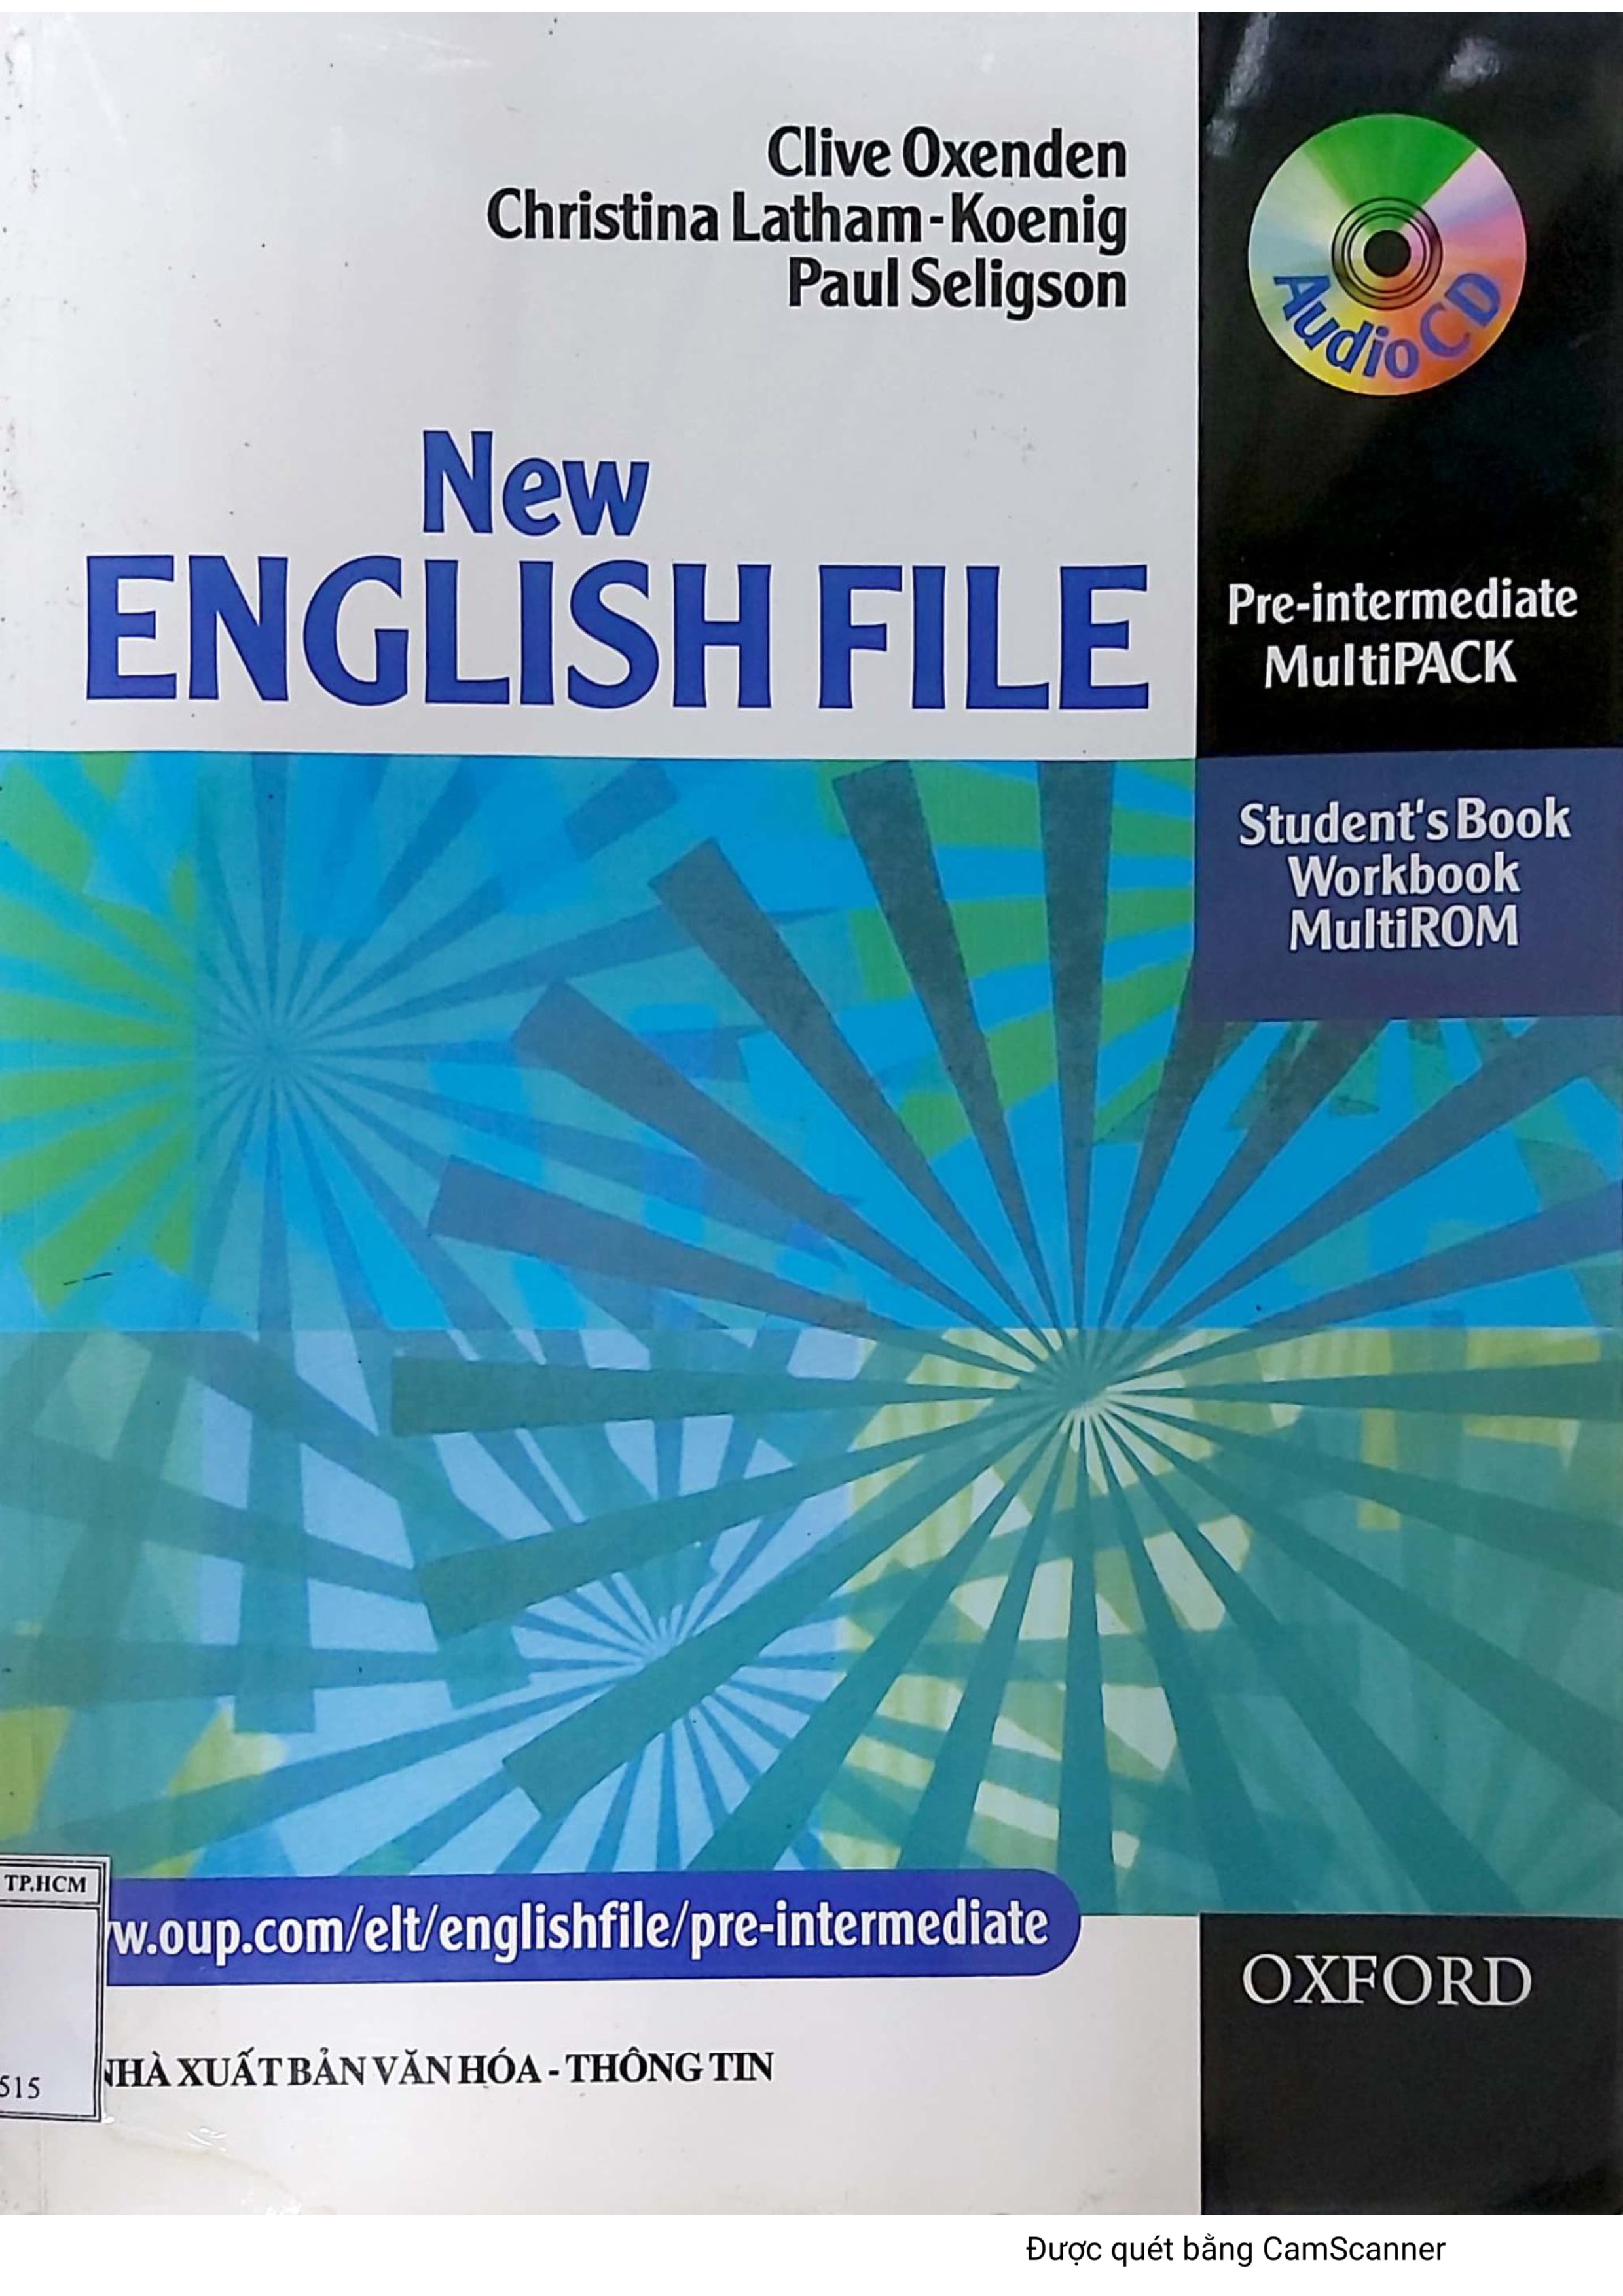 New English file Pre-intermediate MultiPack